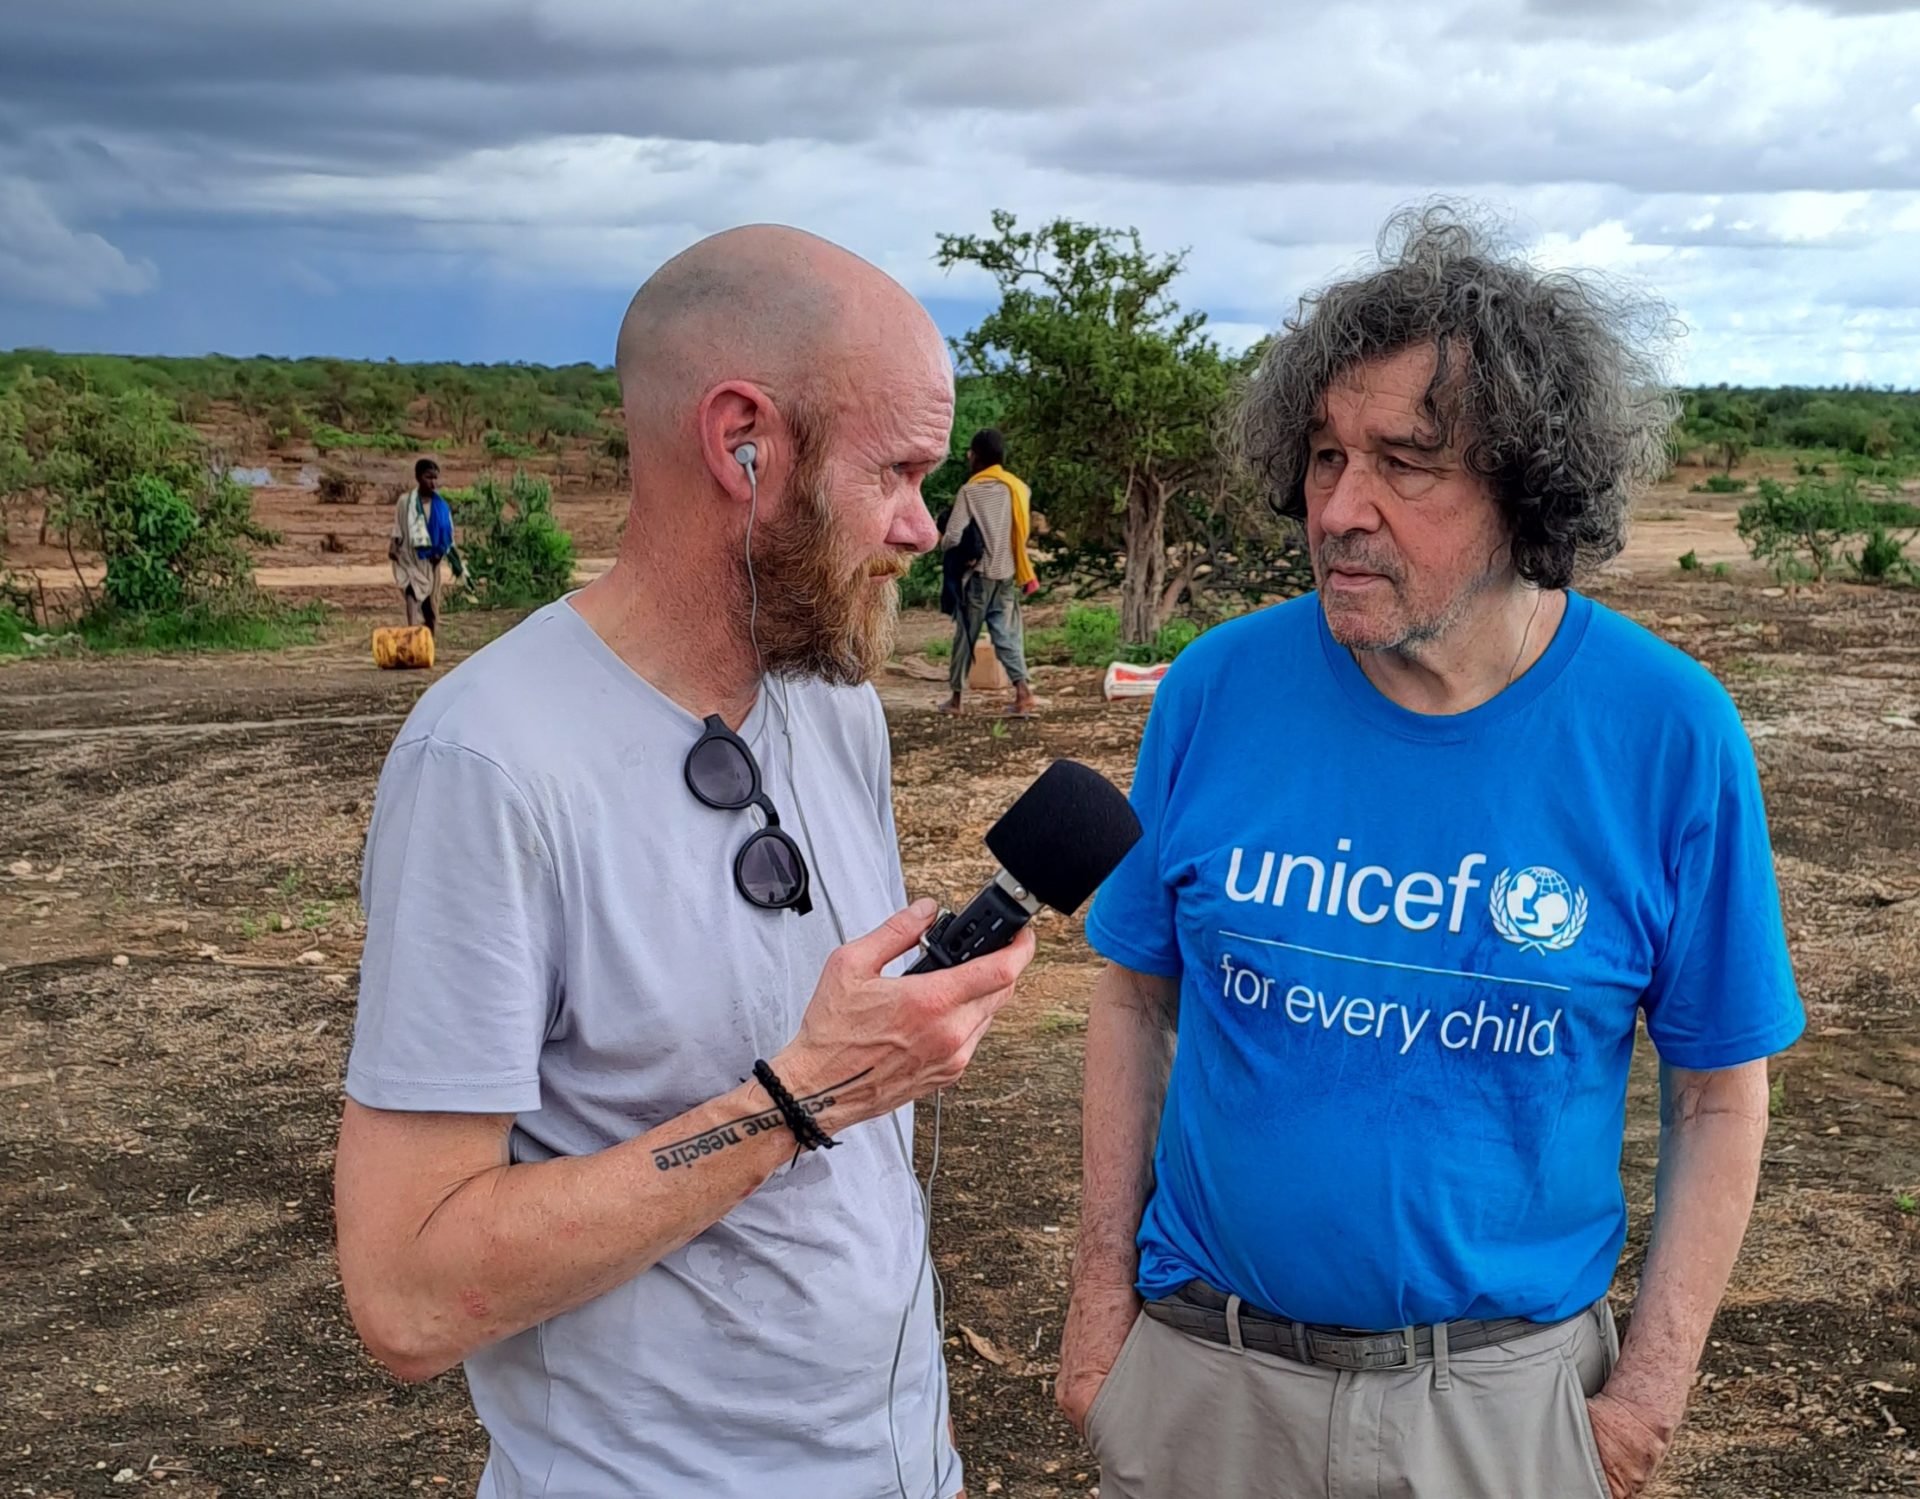 Actor Stephen Rea talking with Sean Moncrieff in Somalia